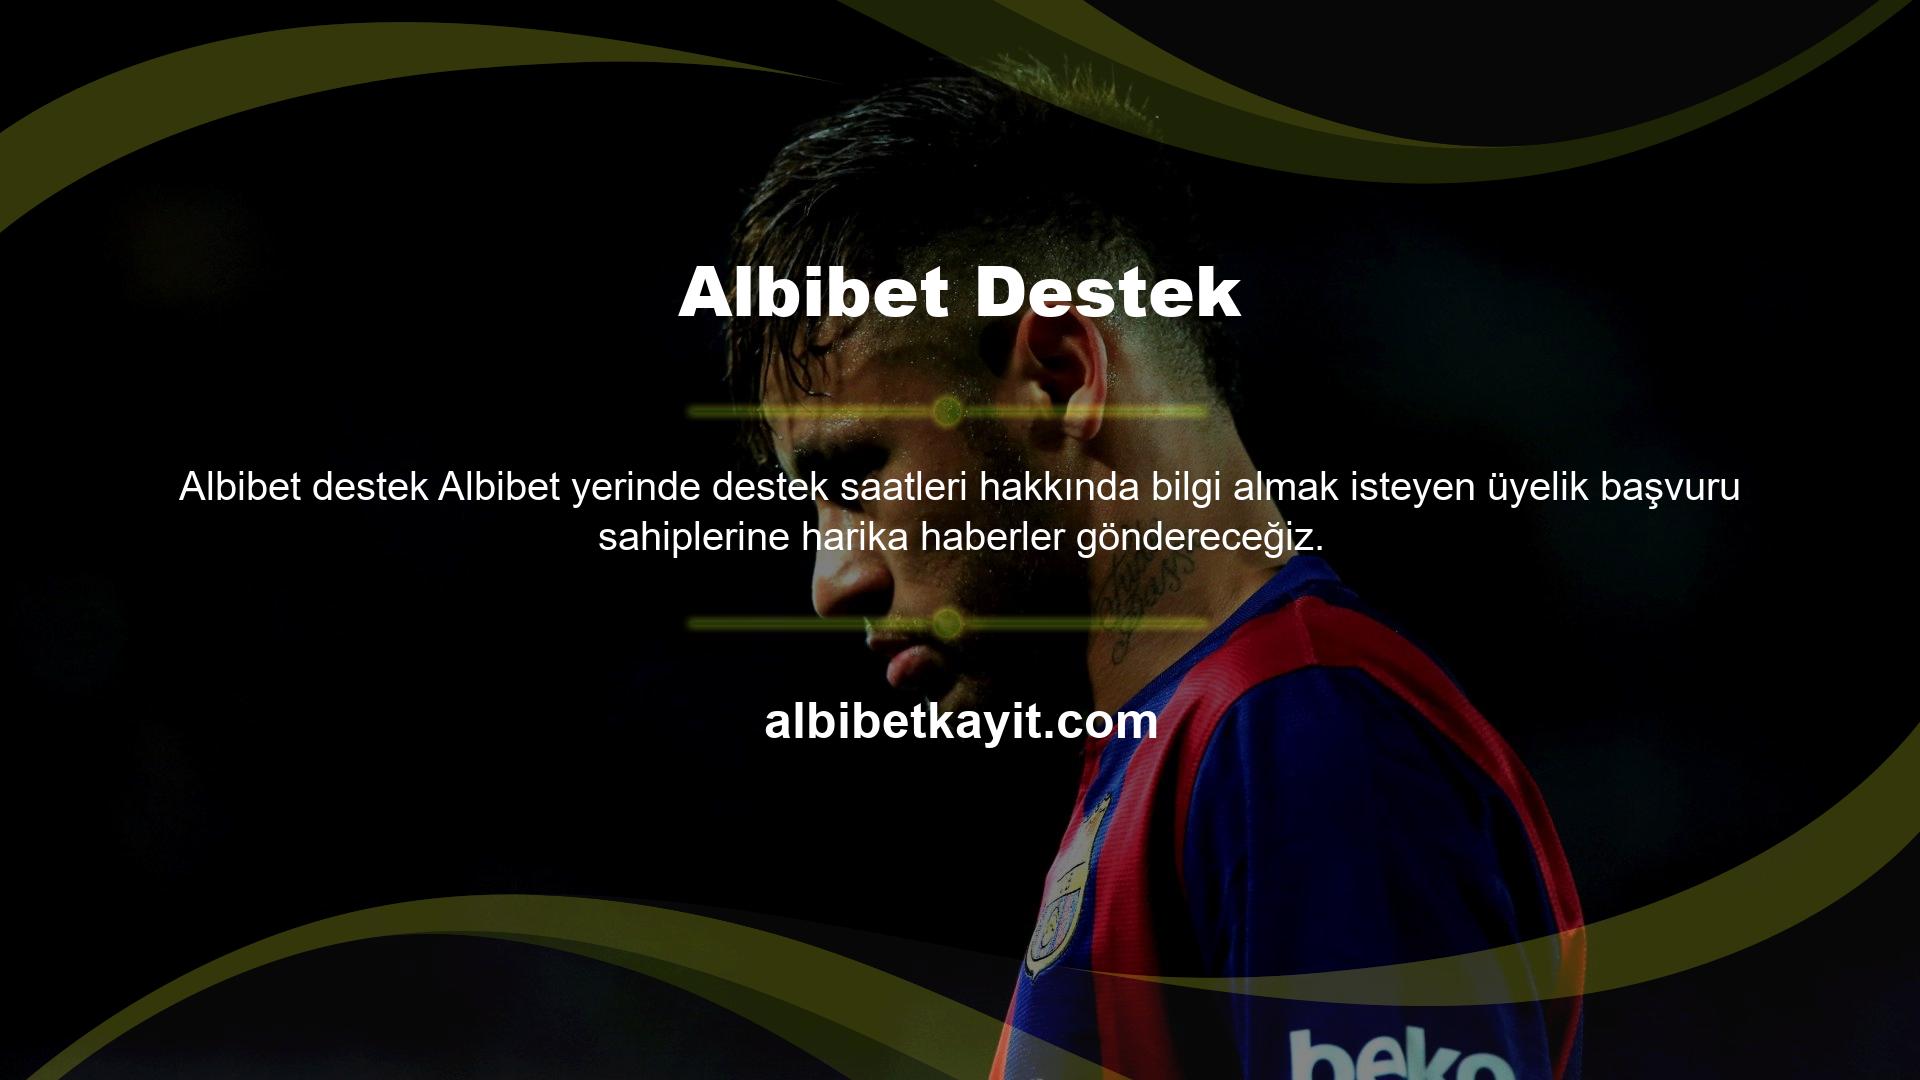 Albibet Destek